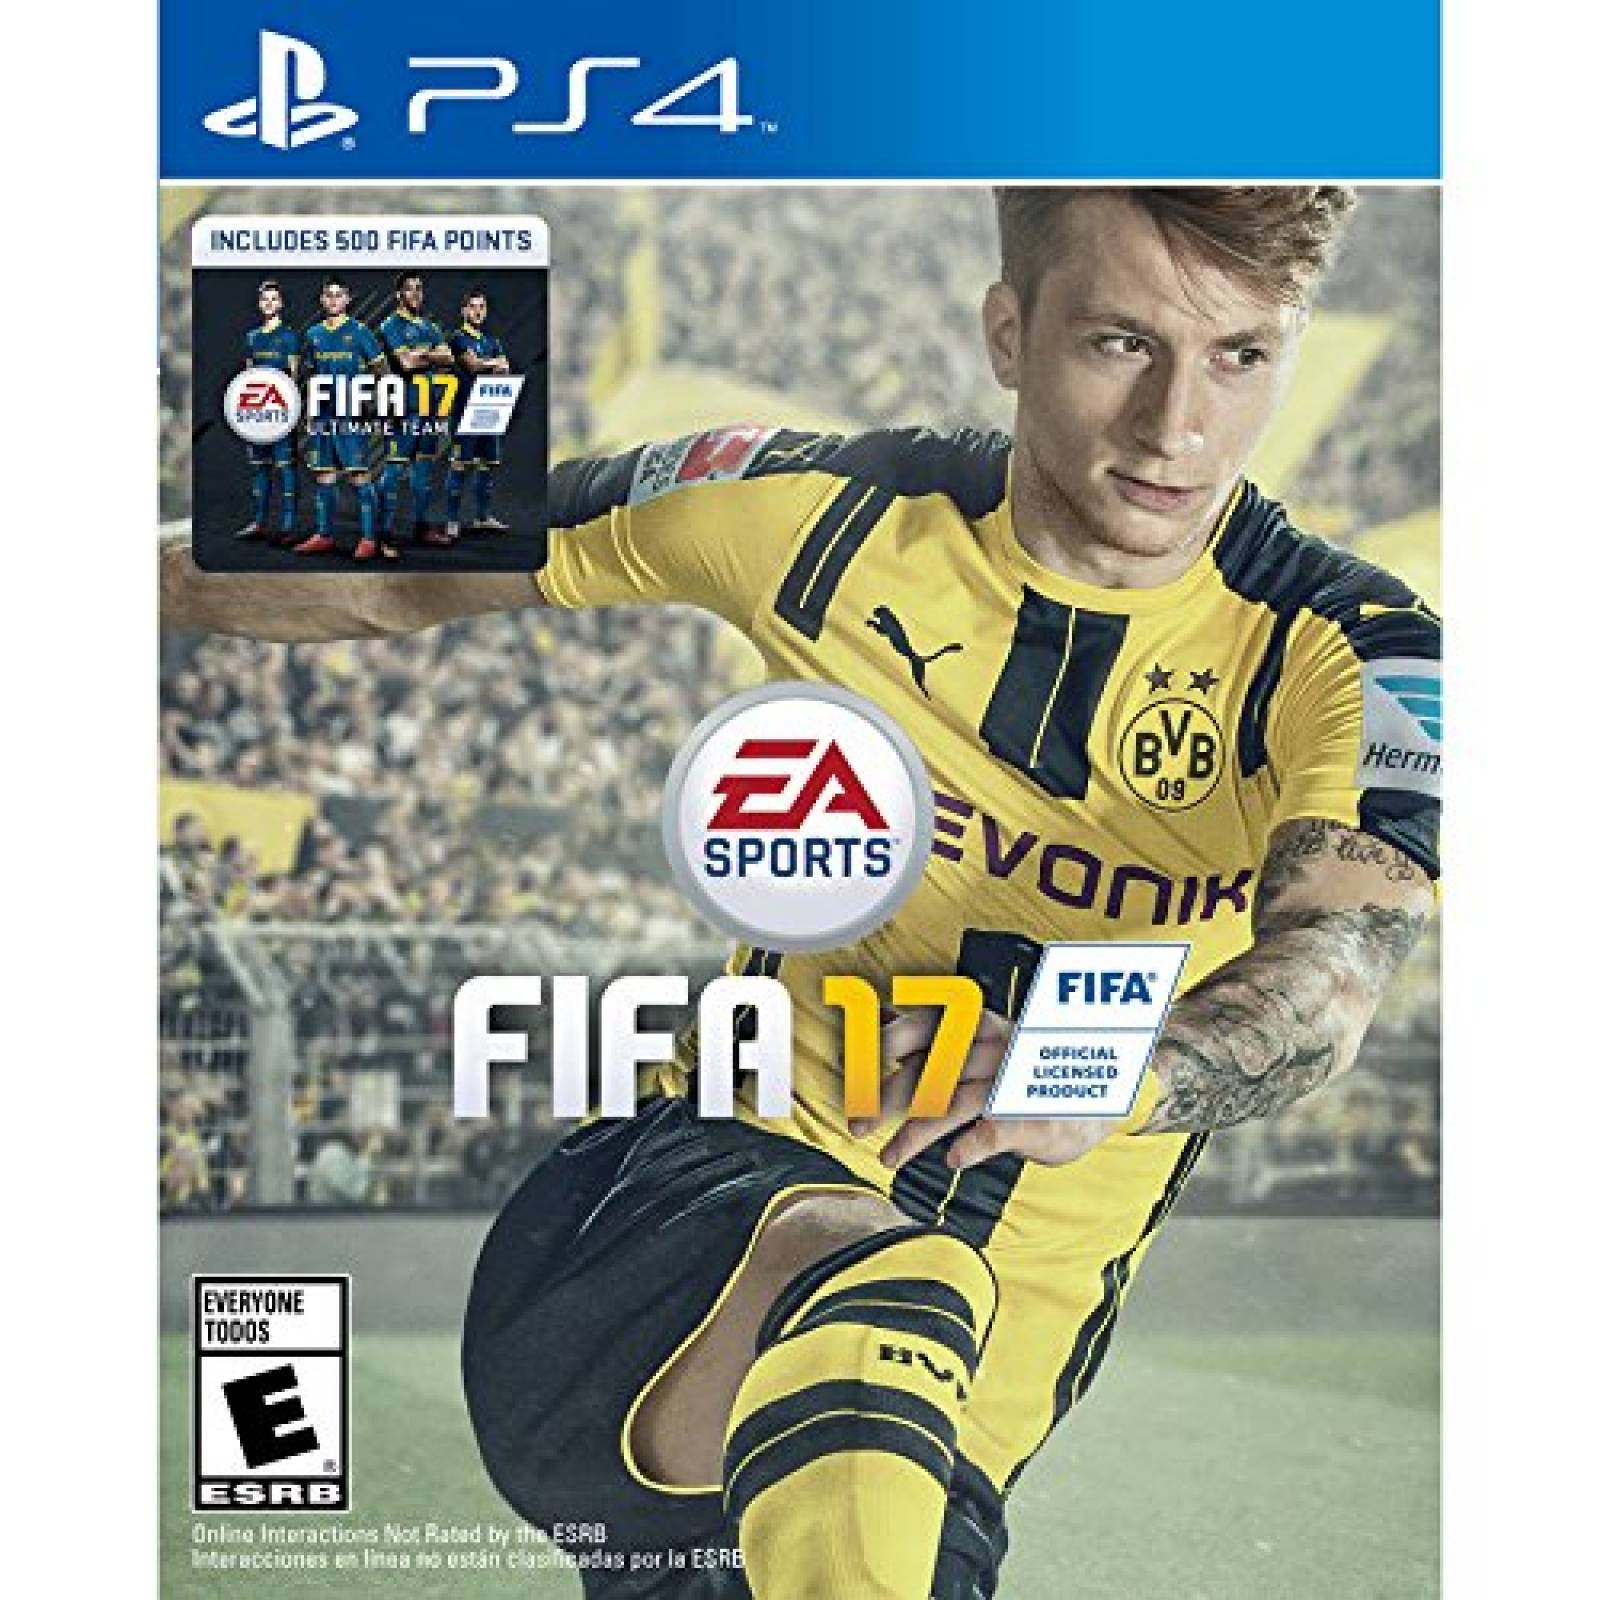 PS4 Fifa 17